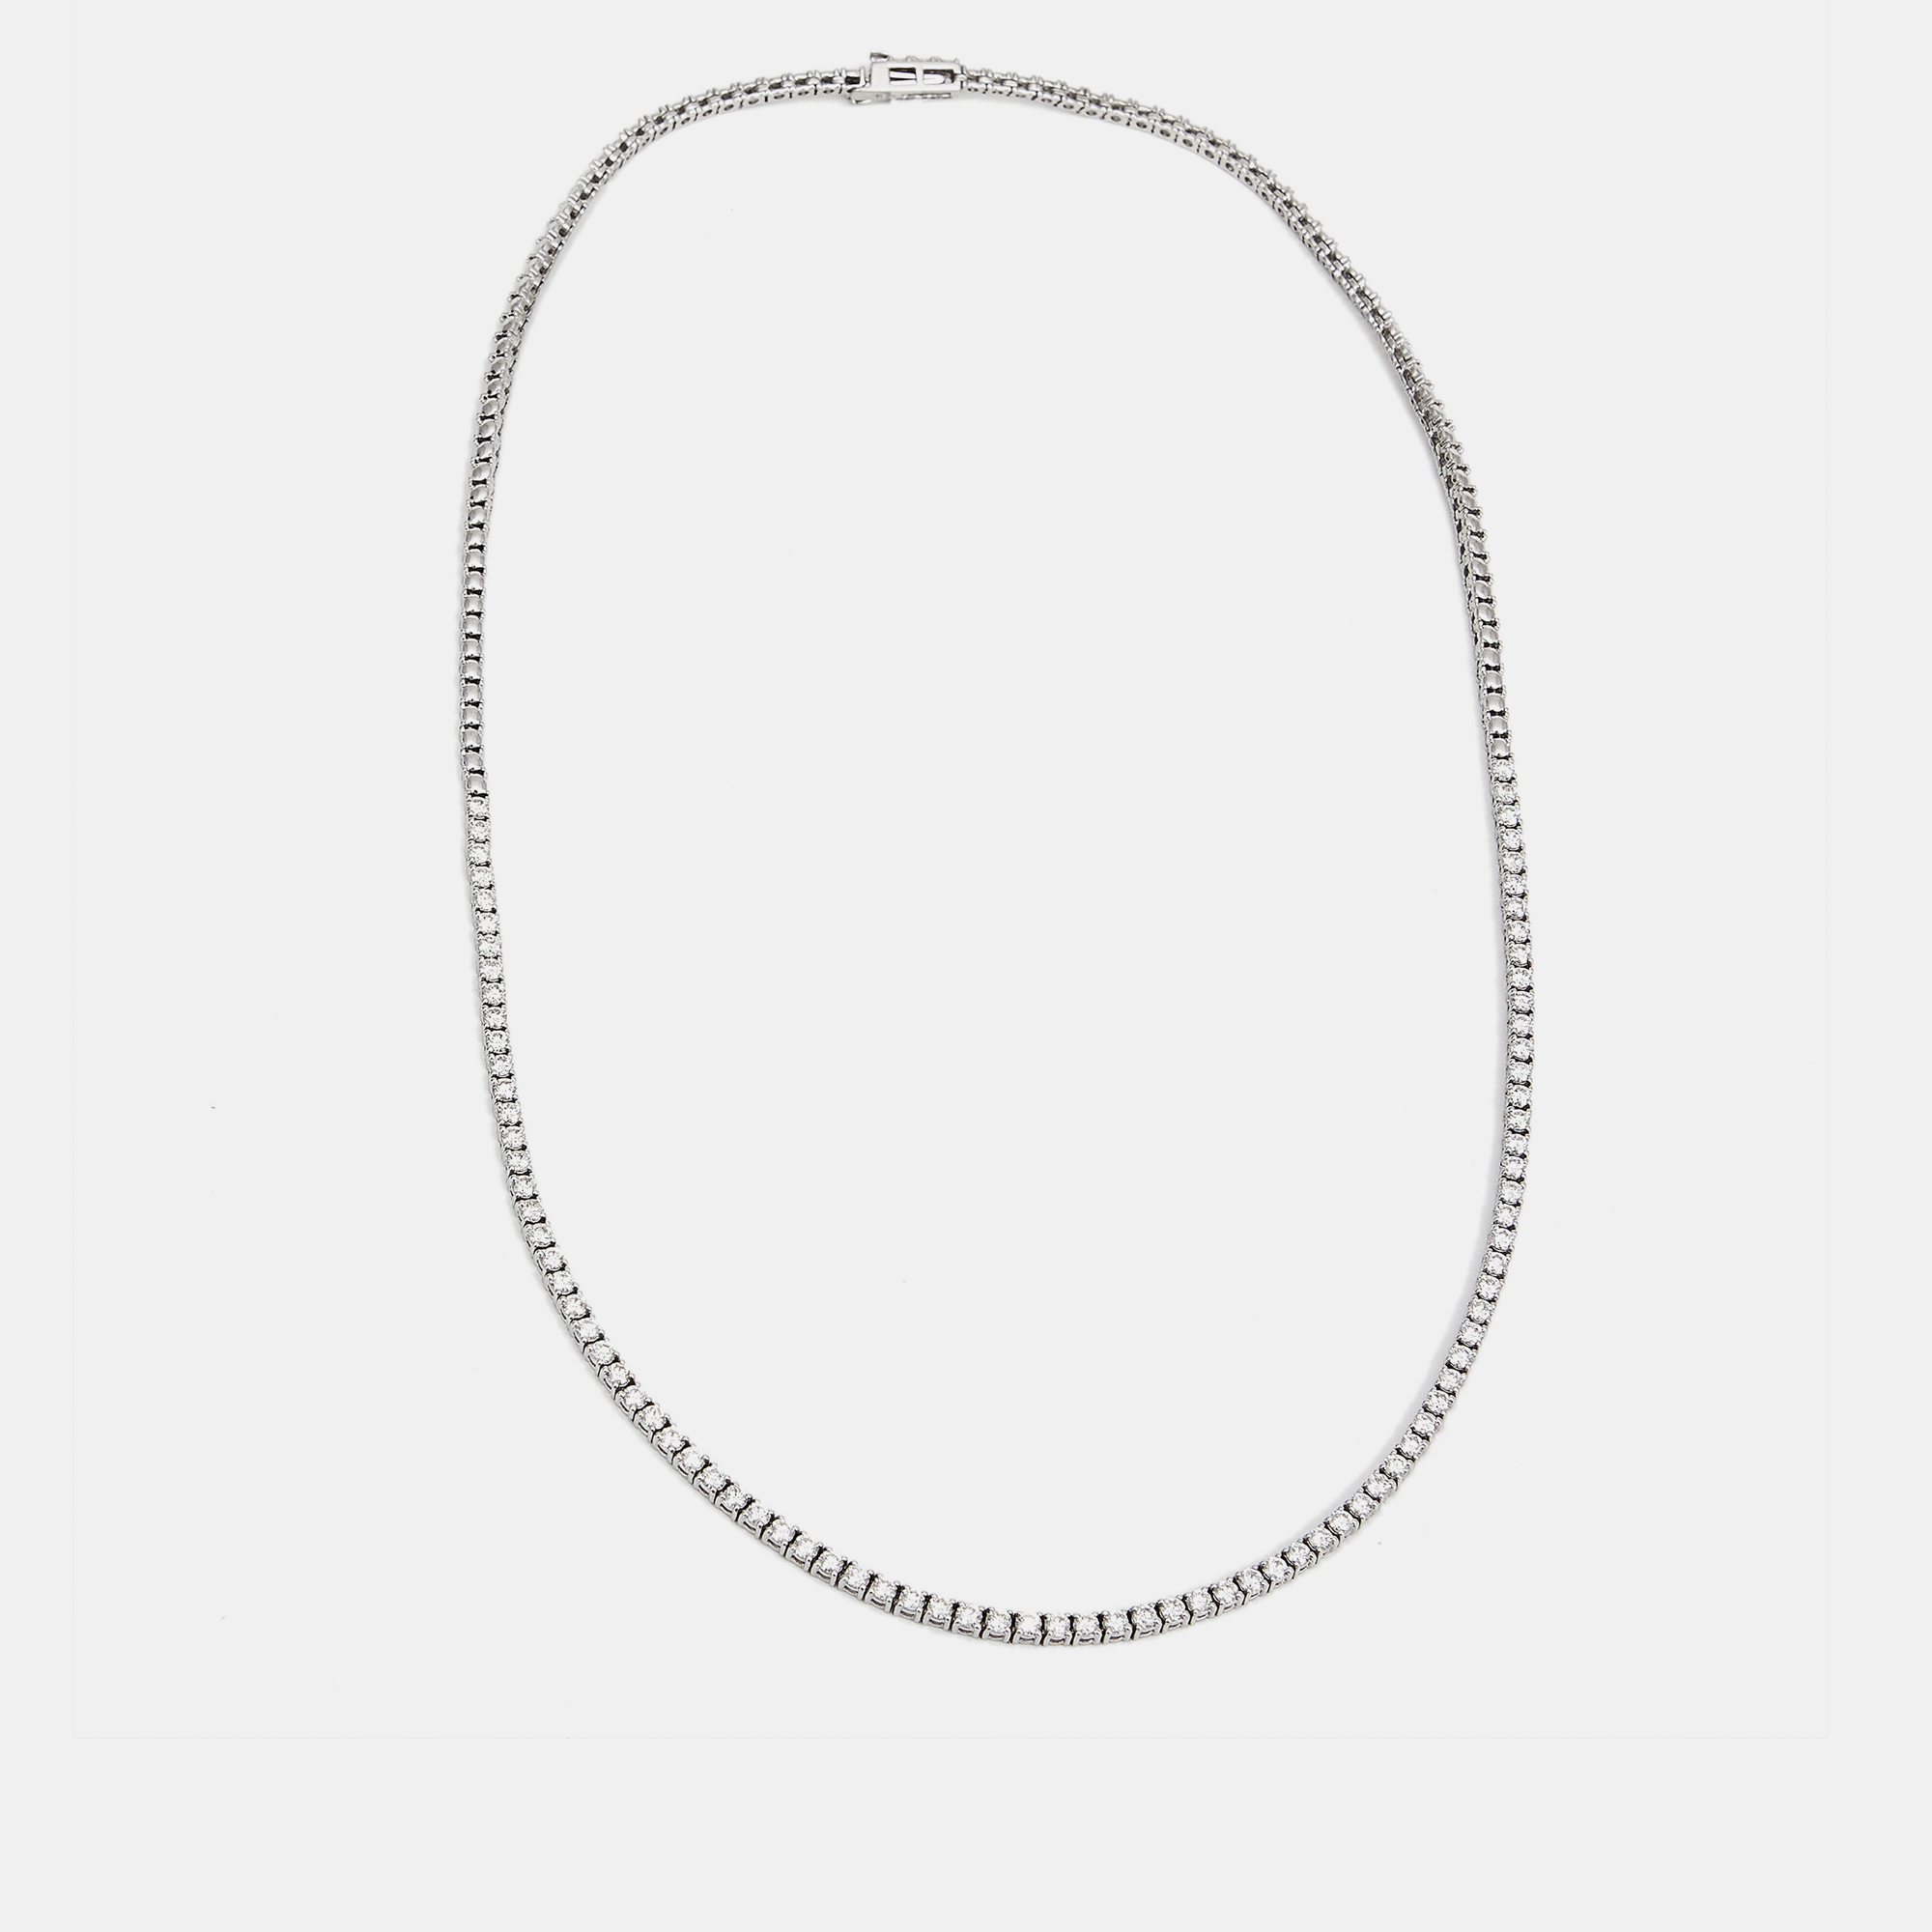 The diamond edit elegant diamond 2.97 cts 18k white gold tennis necklace